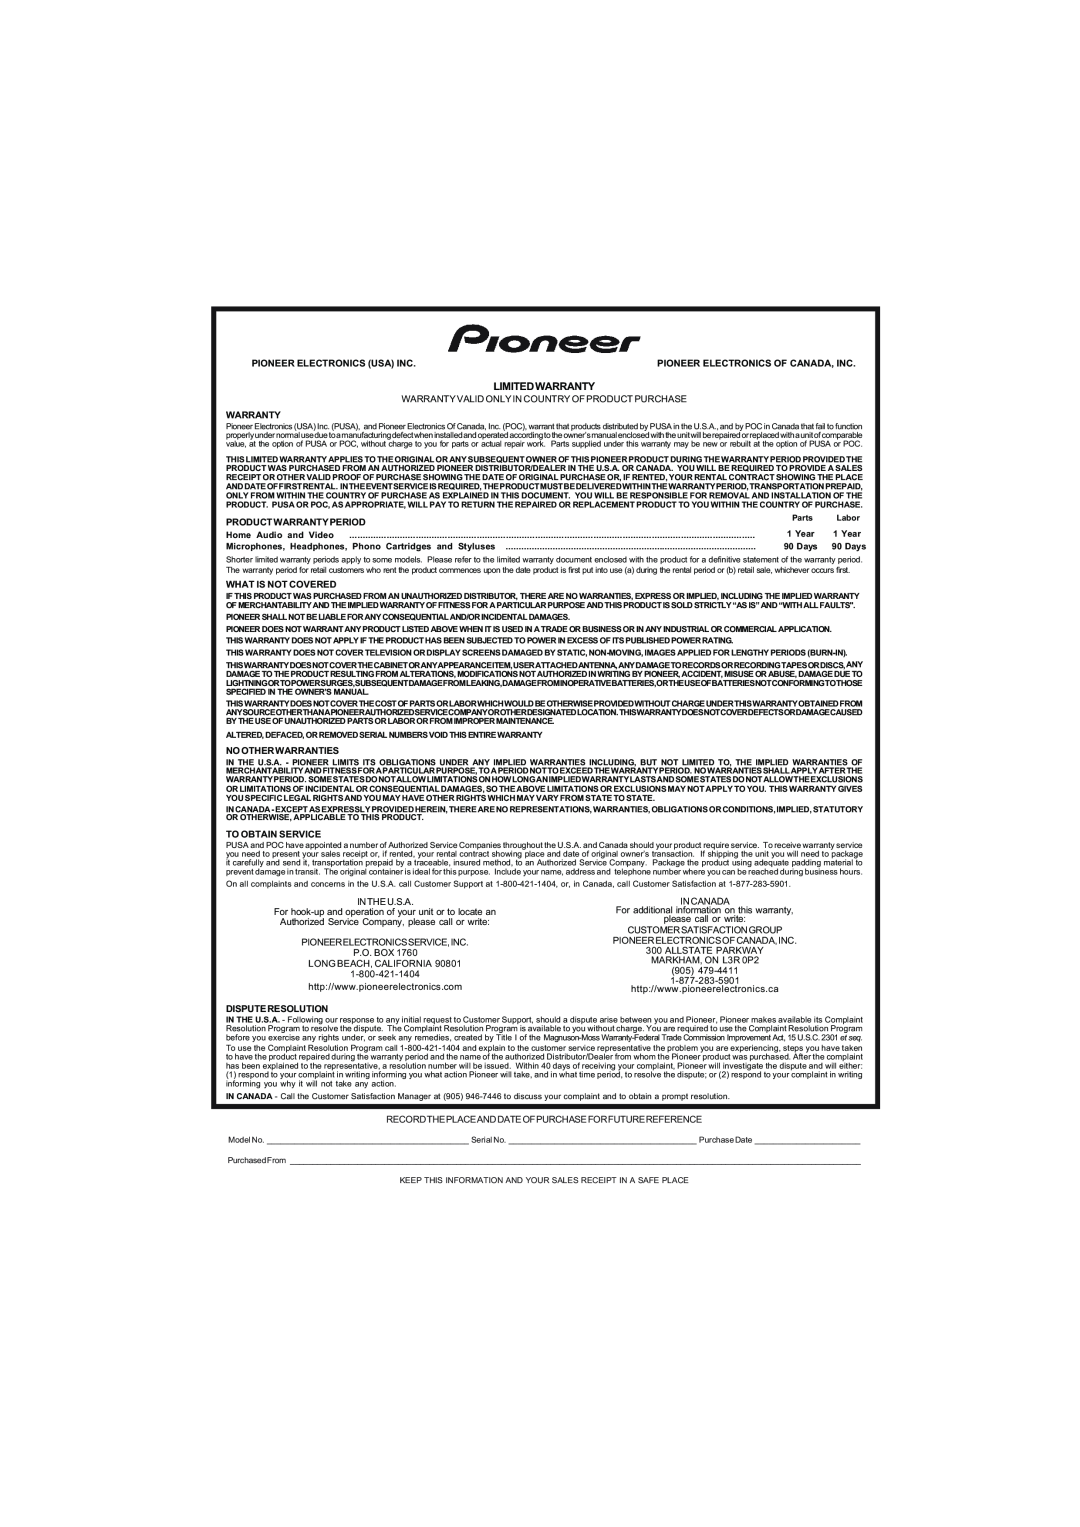 Pioneer VSX-521-K operating instructions Limitedwarranty, Recordtheplaceanddateofpurchaseforfuturereference 